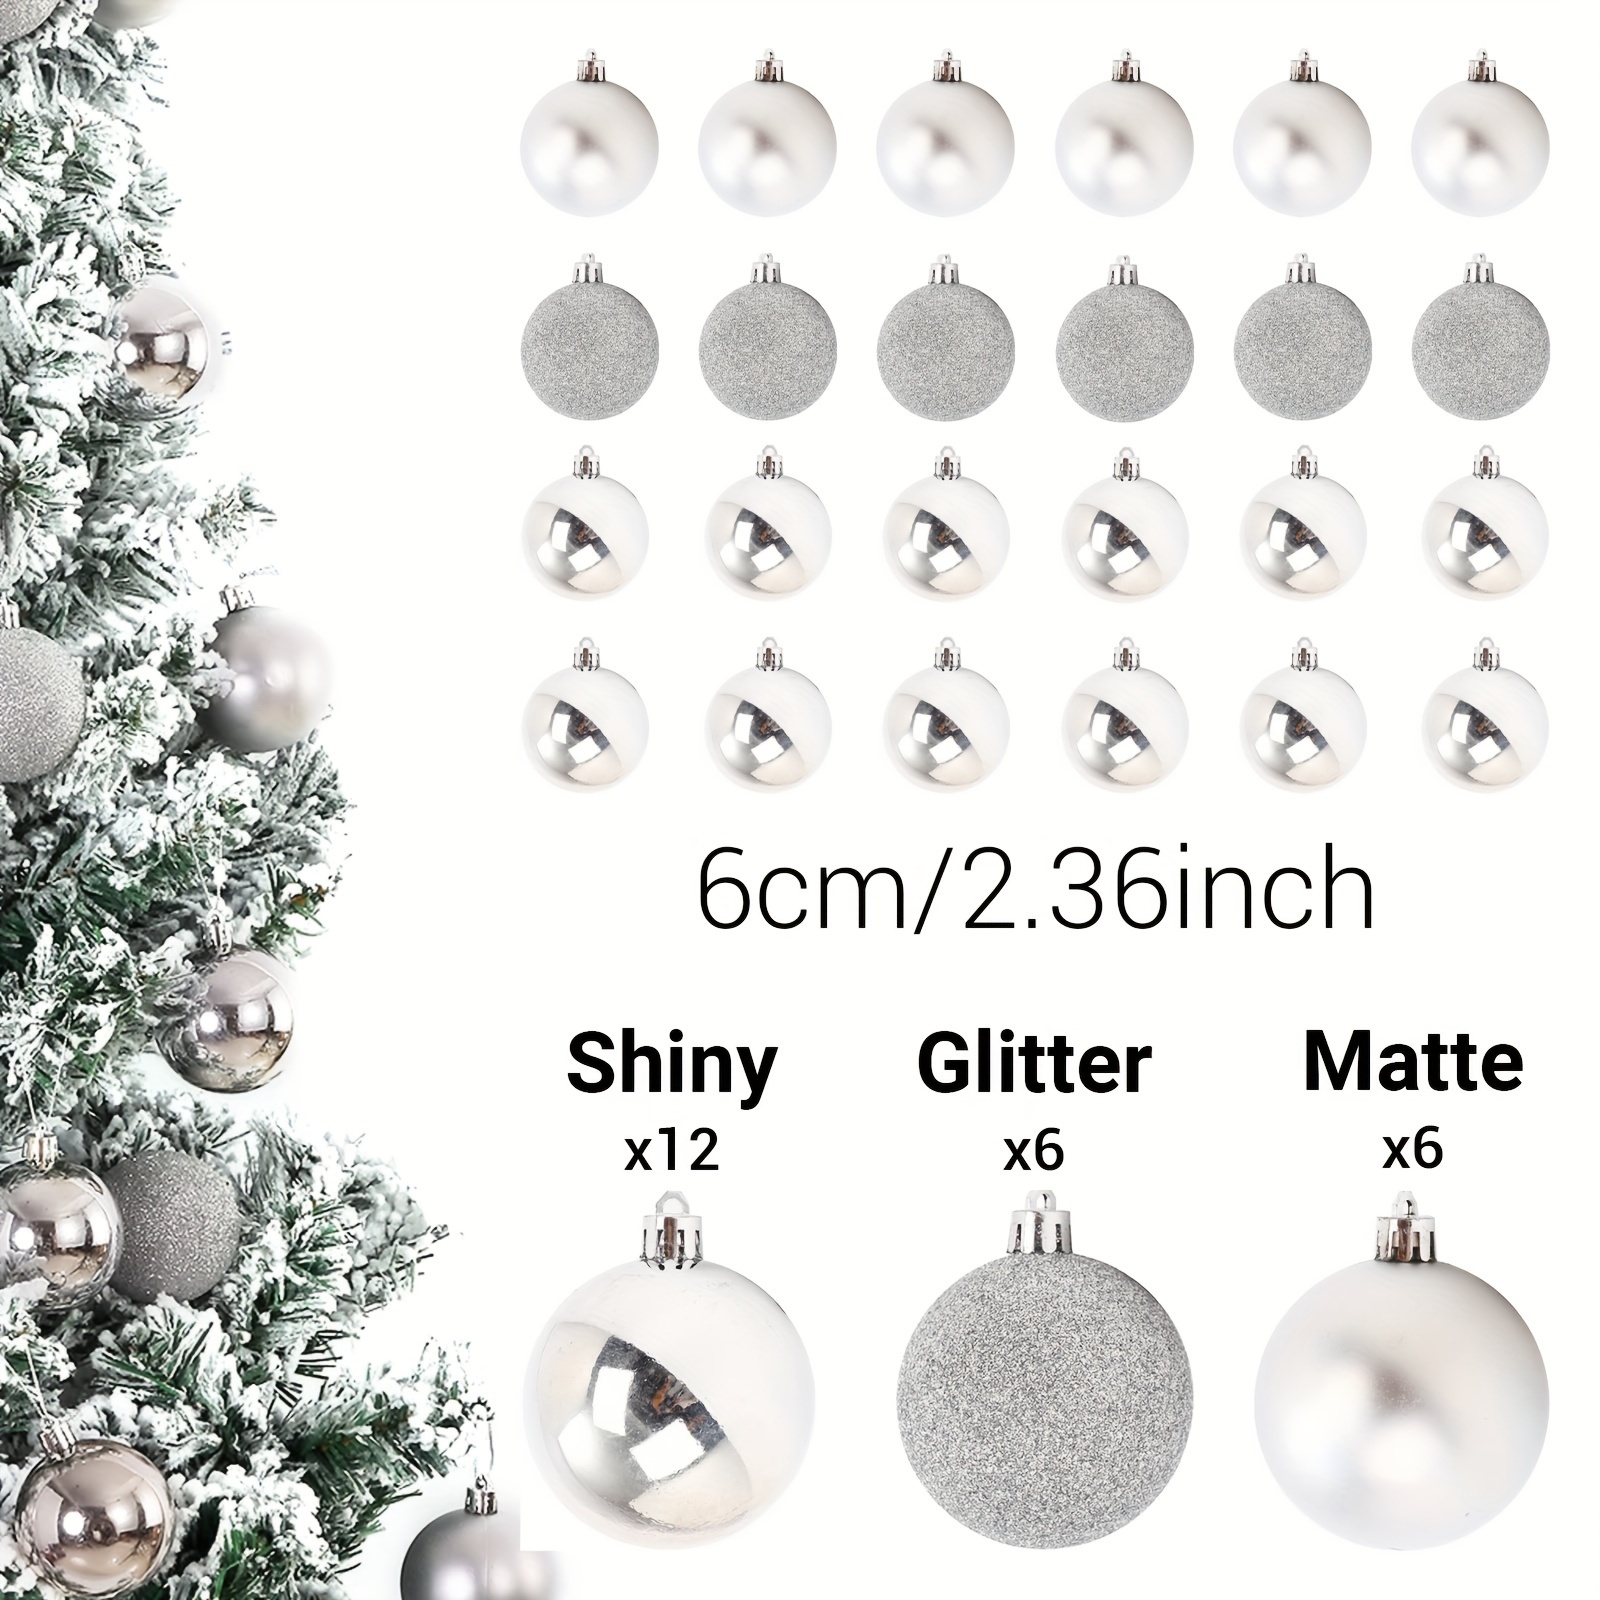 24pcs Silver Christmas Ball Ornaments For Christmas Tree Decoration